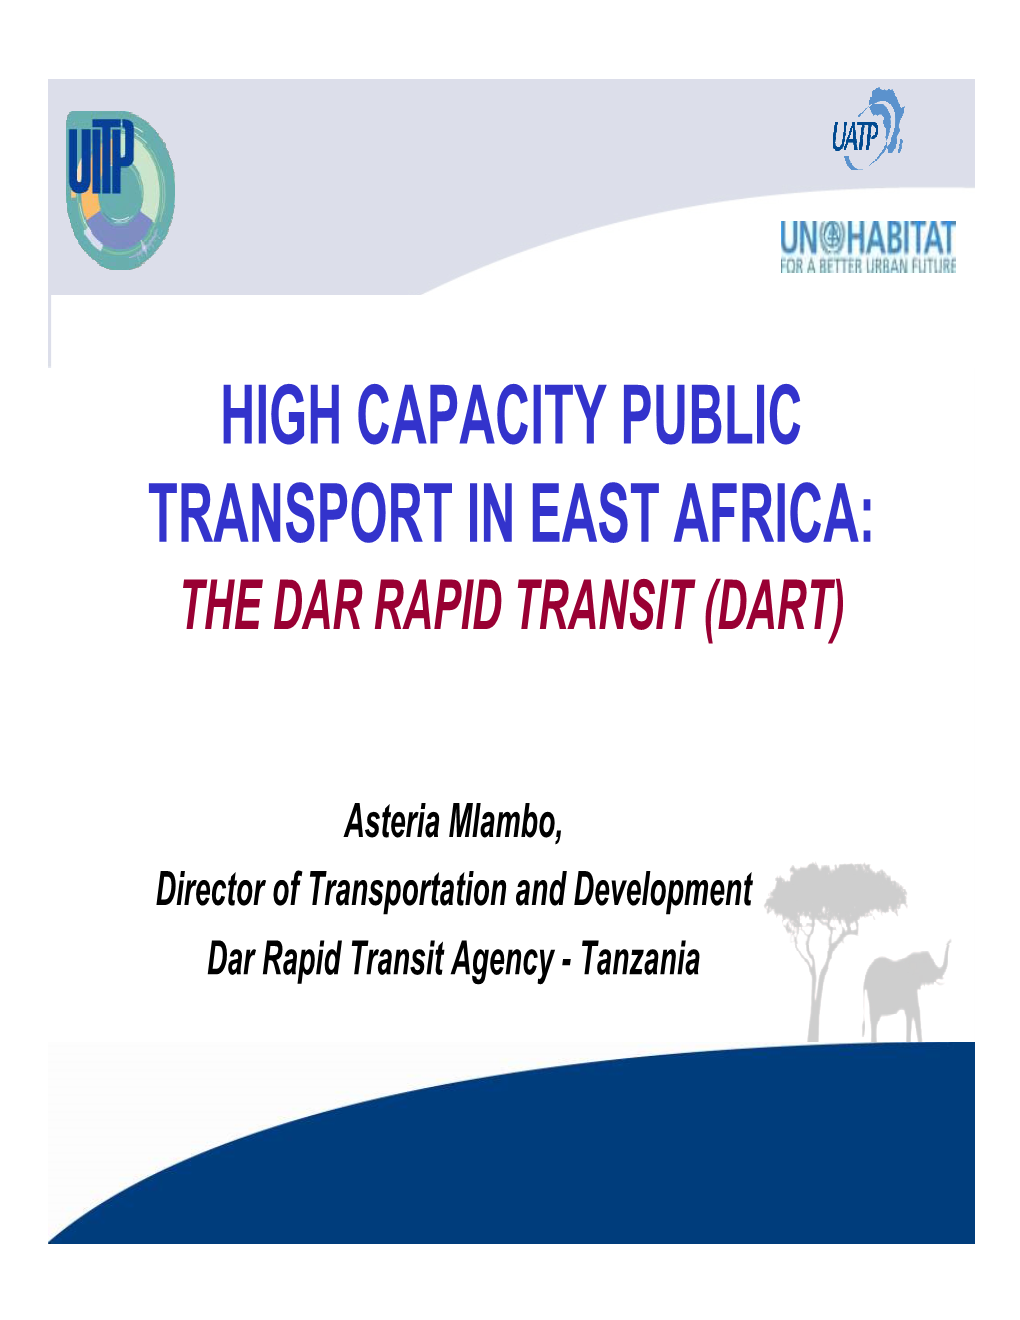 High Capacity Public Transport in East Africa: the Dar Rapid Transit (Dart)